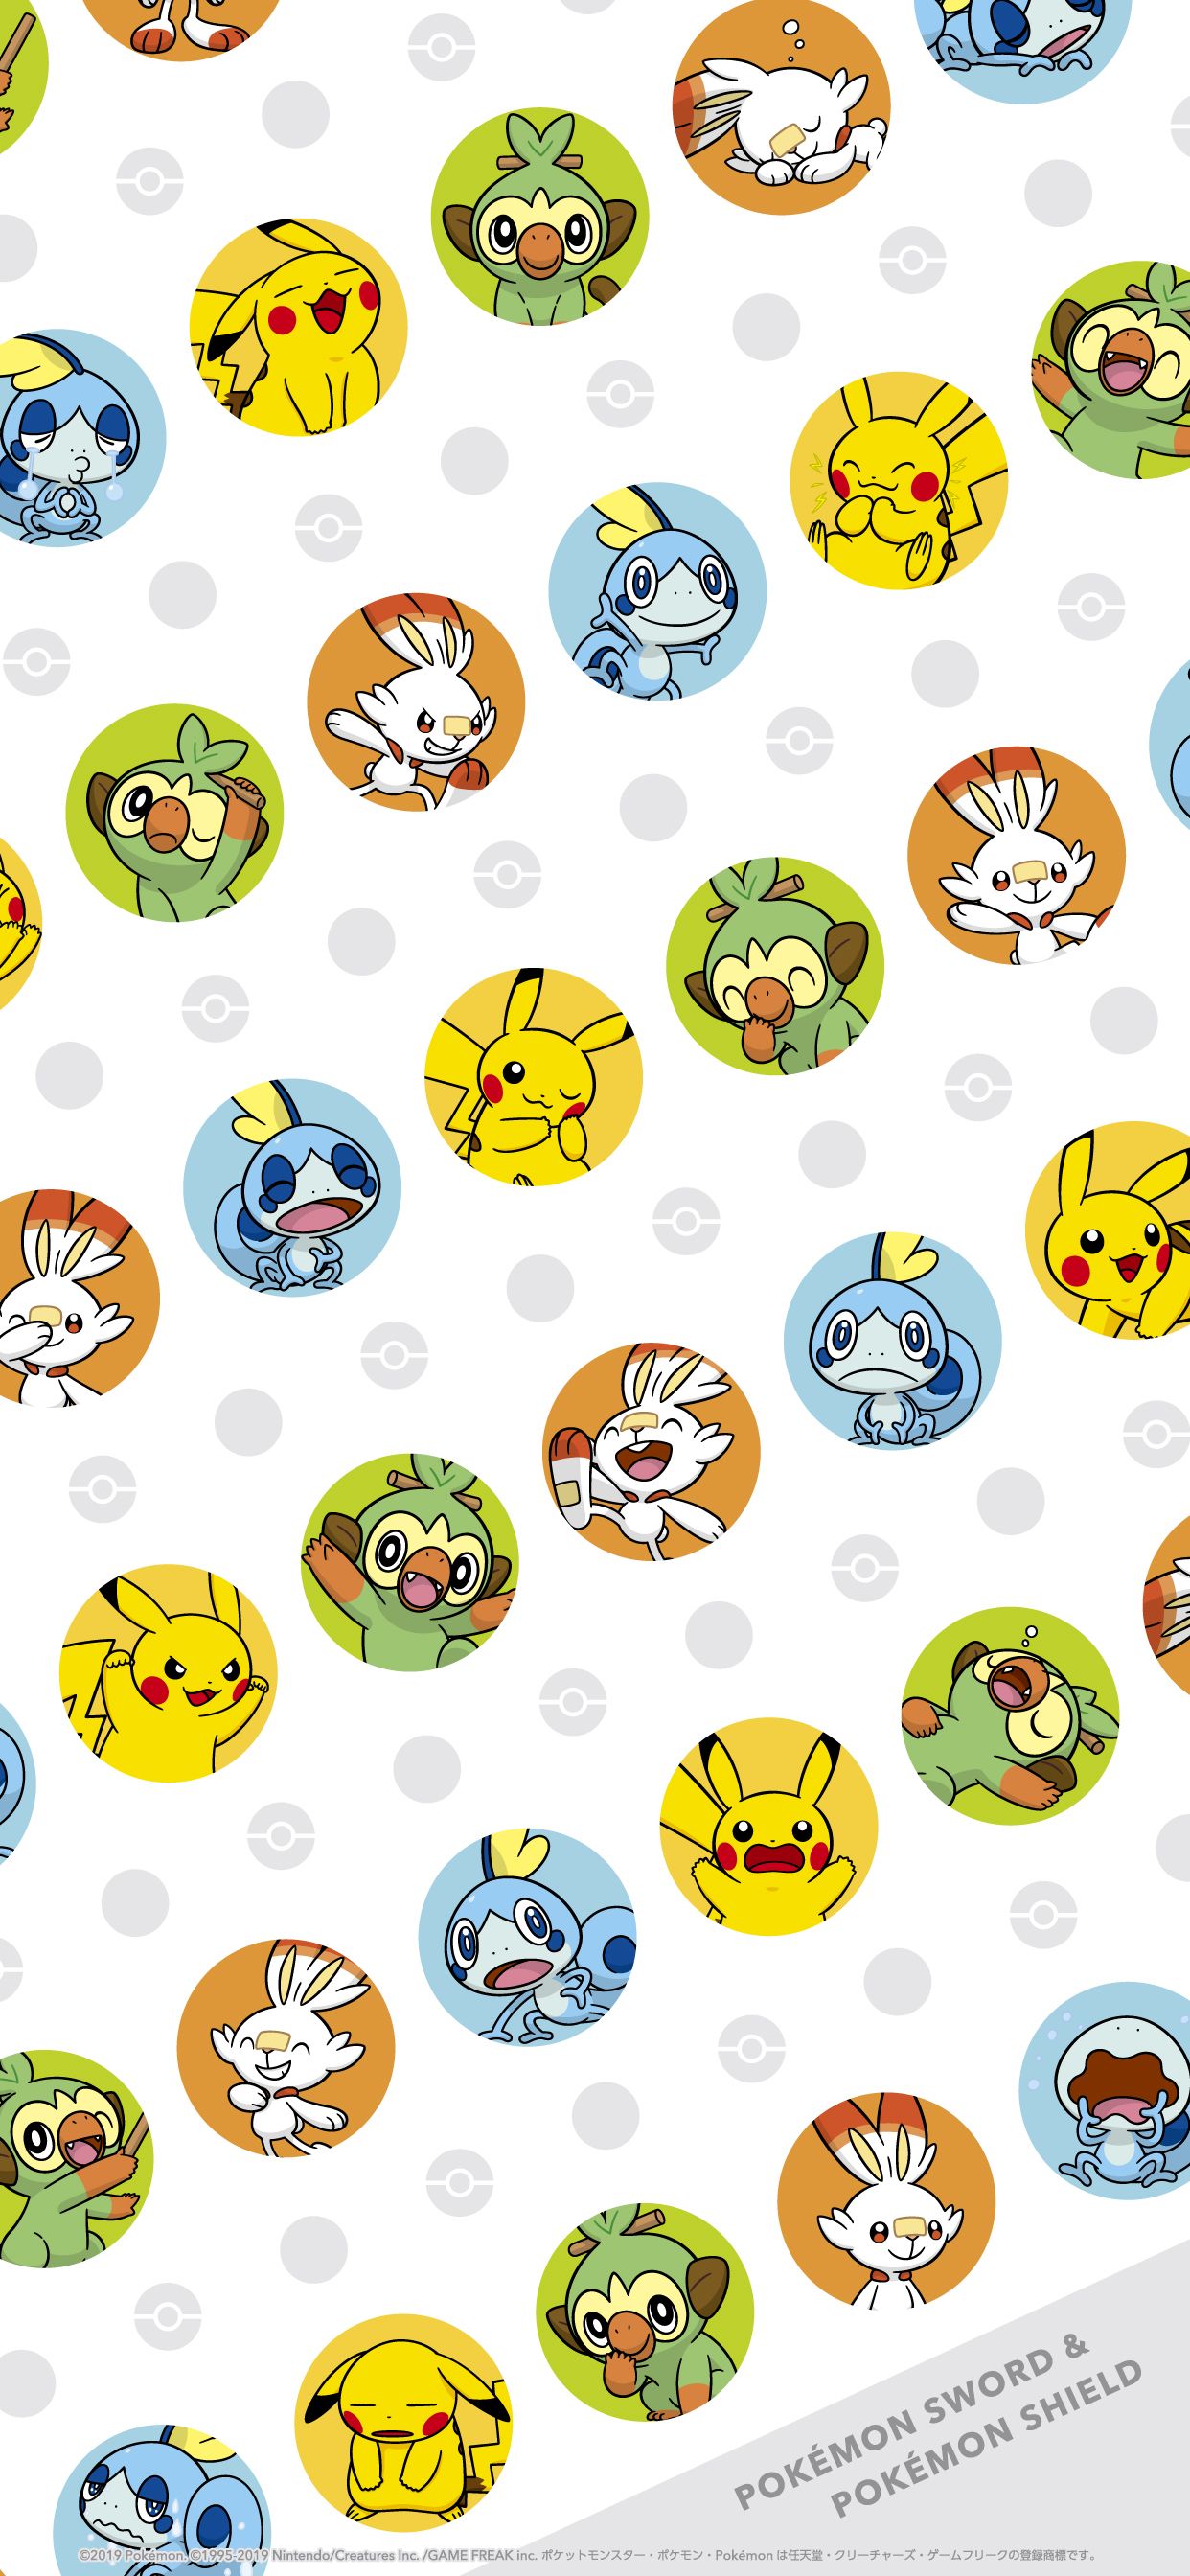 Pokémon Sword HD Smartphone Wallpapers - Wallpaper Cave